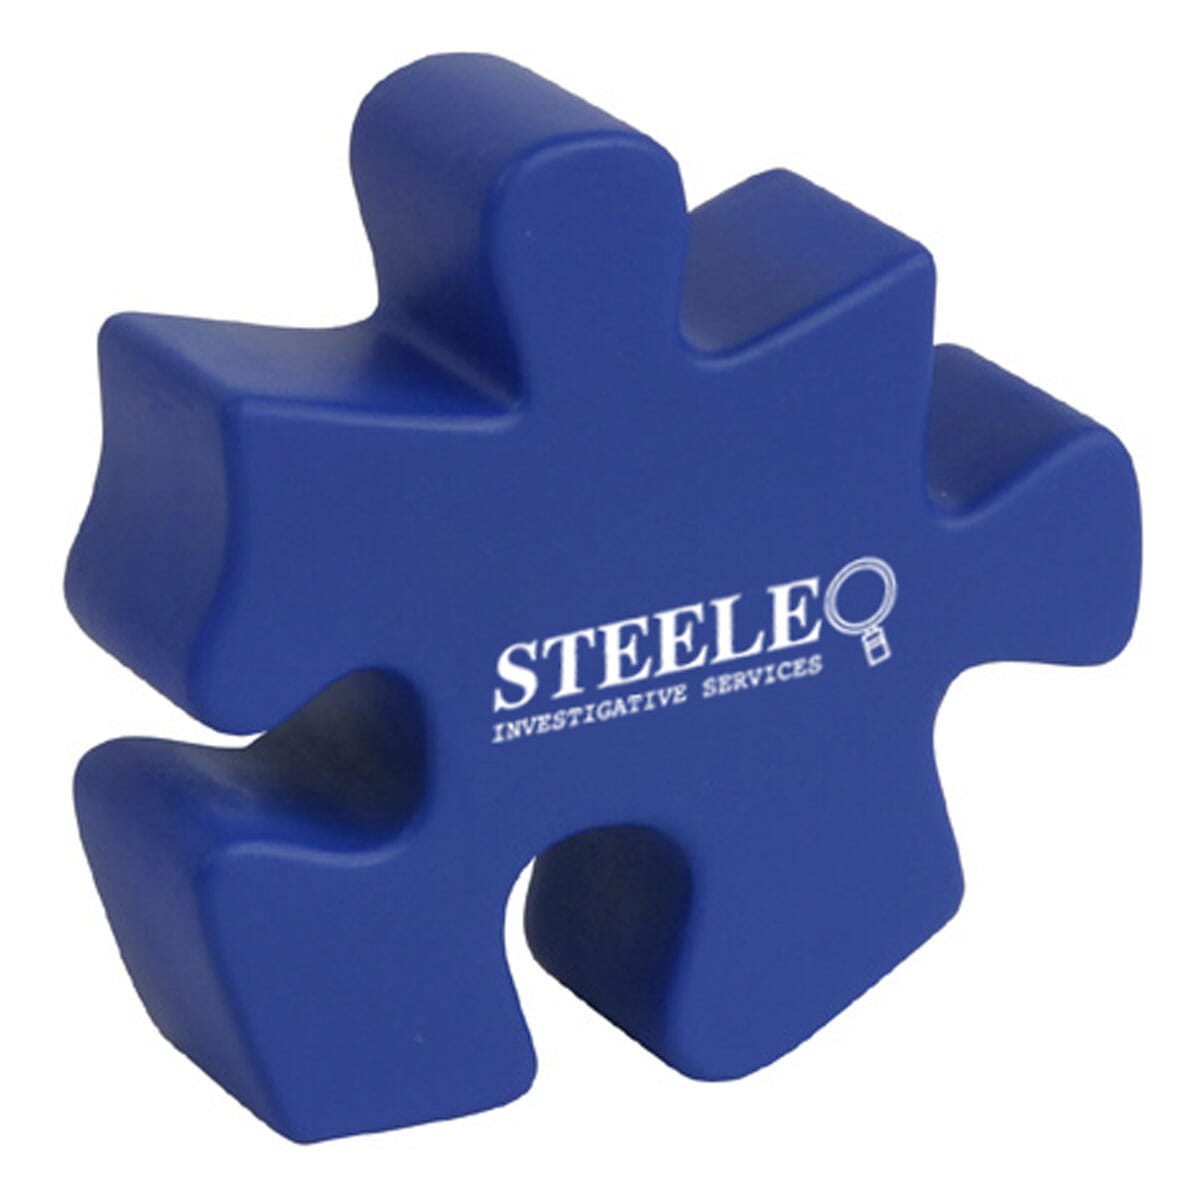 puzzle piece stress balls